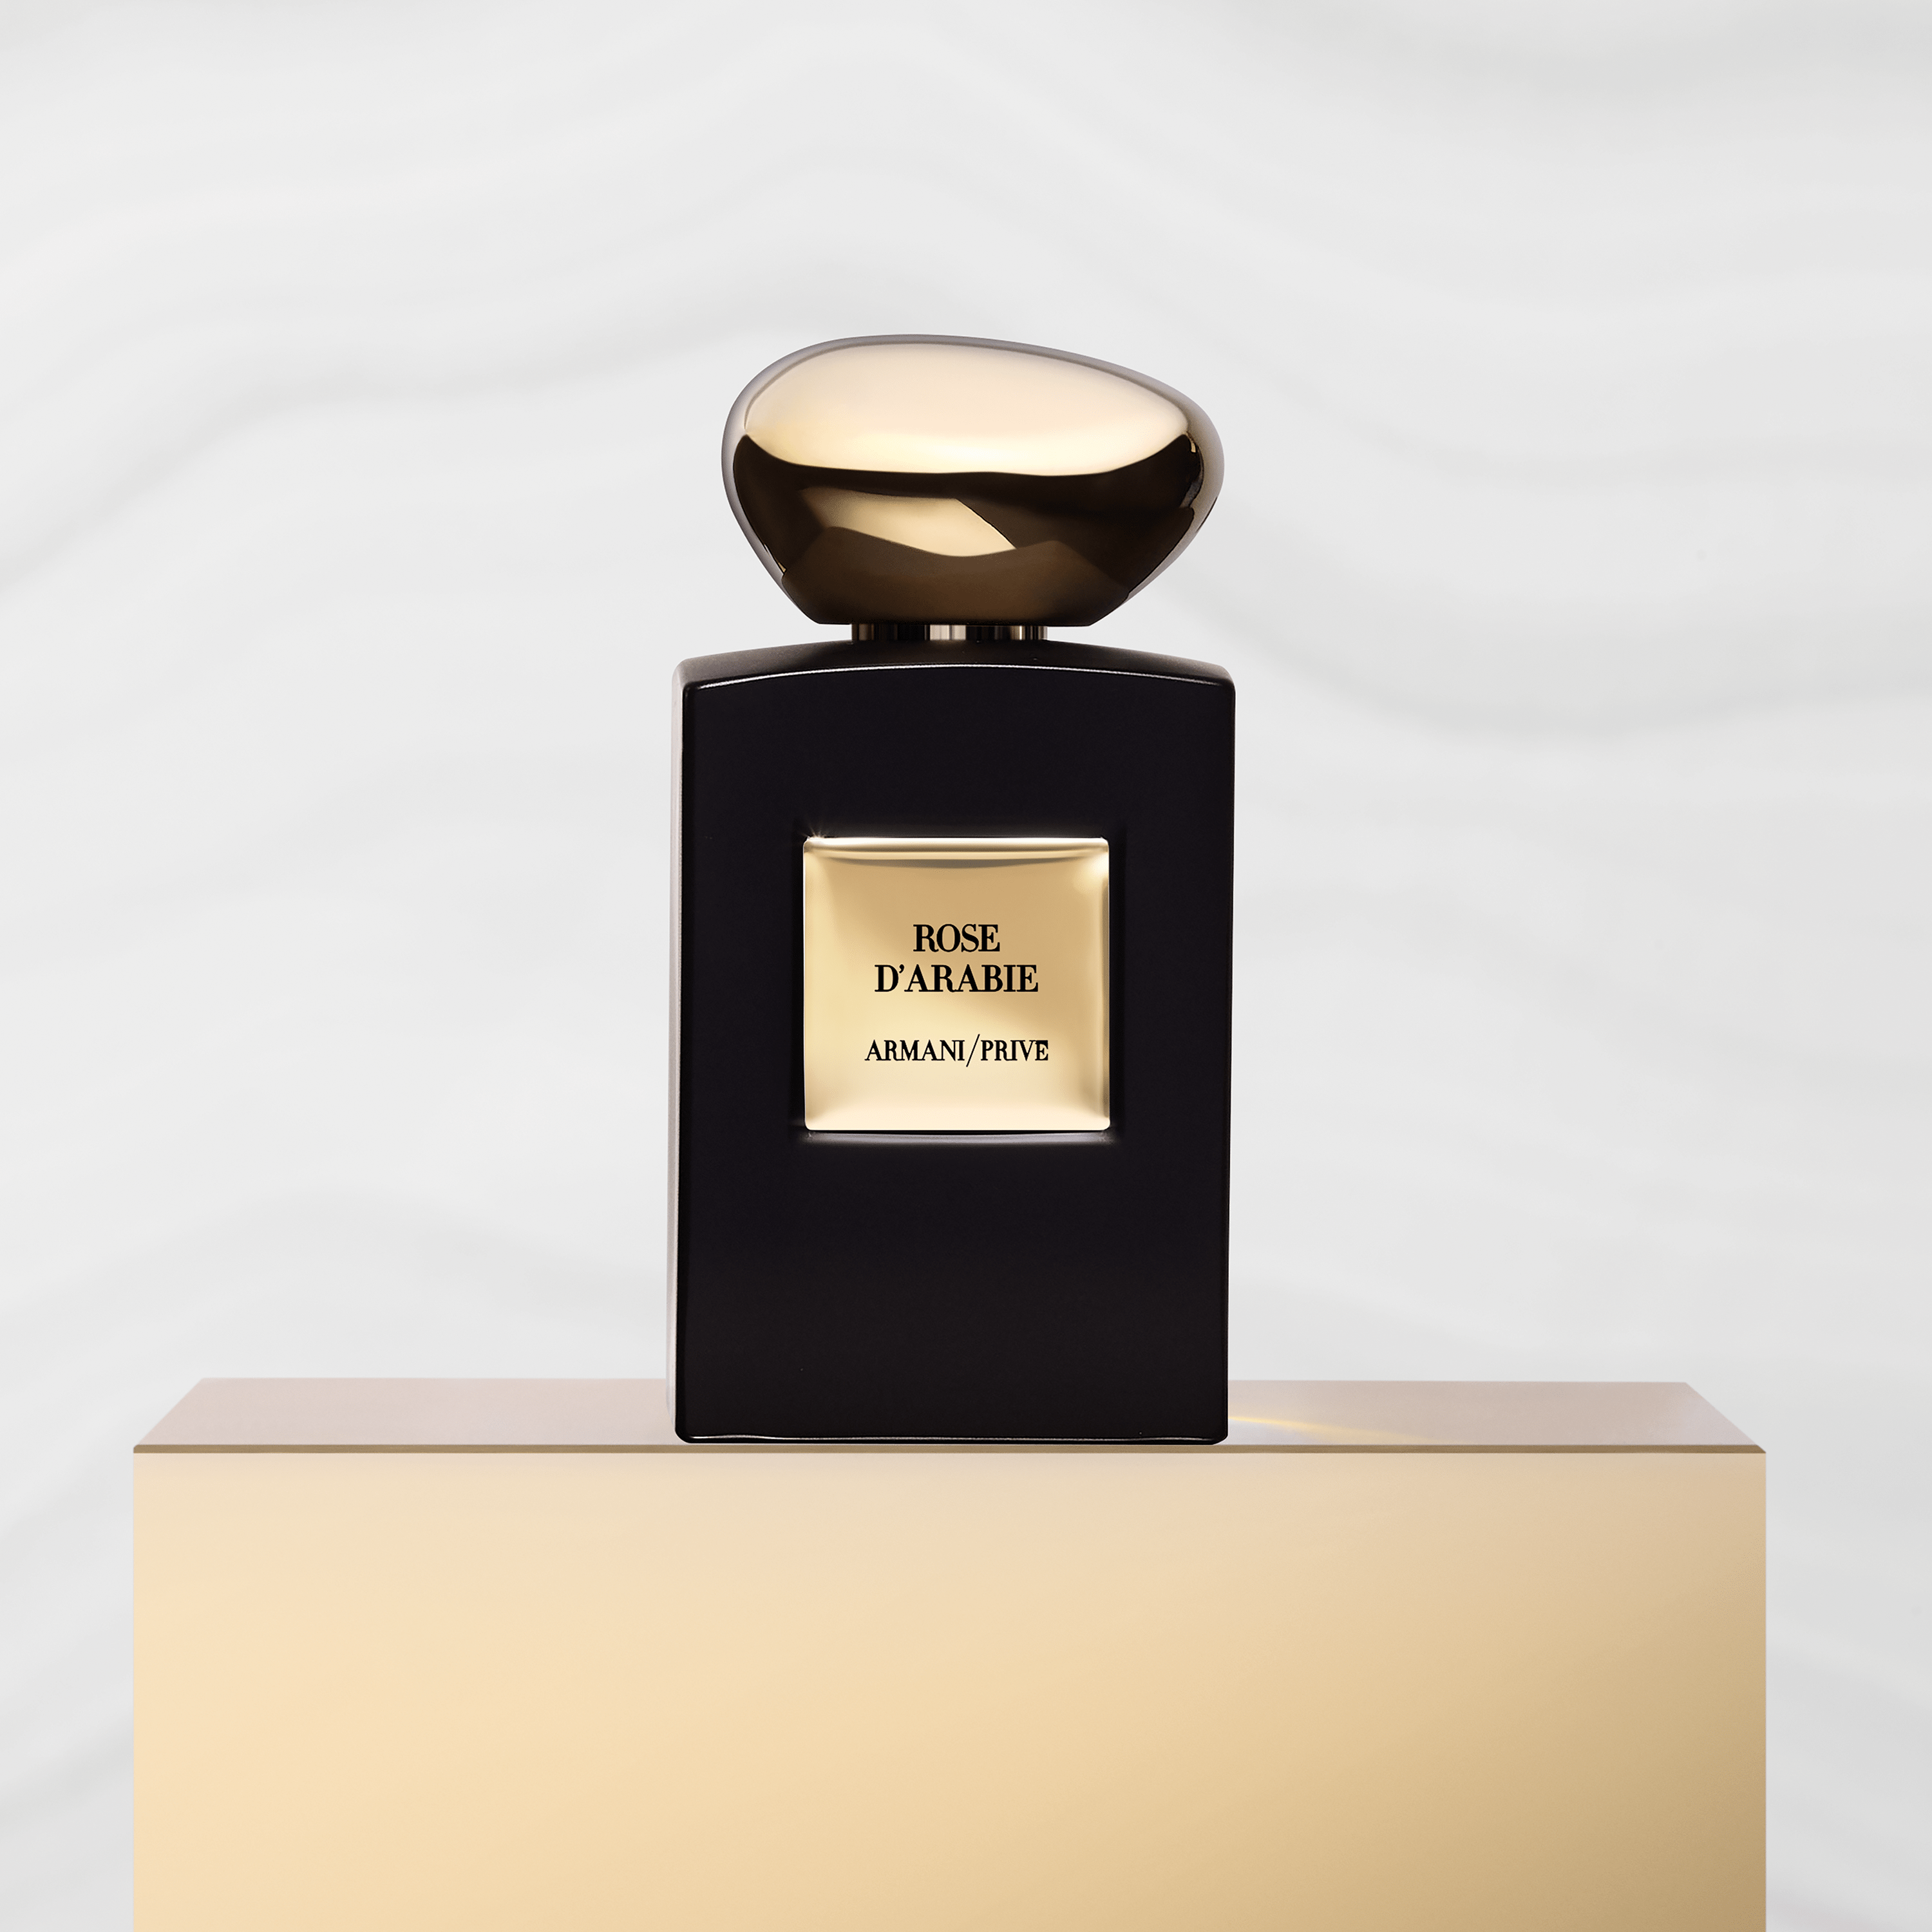 Giorgio Armani Prive Rose D'Arabie EDP Intense | My Perfume Shop Australia